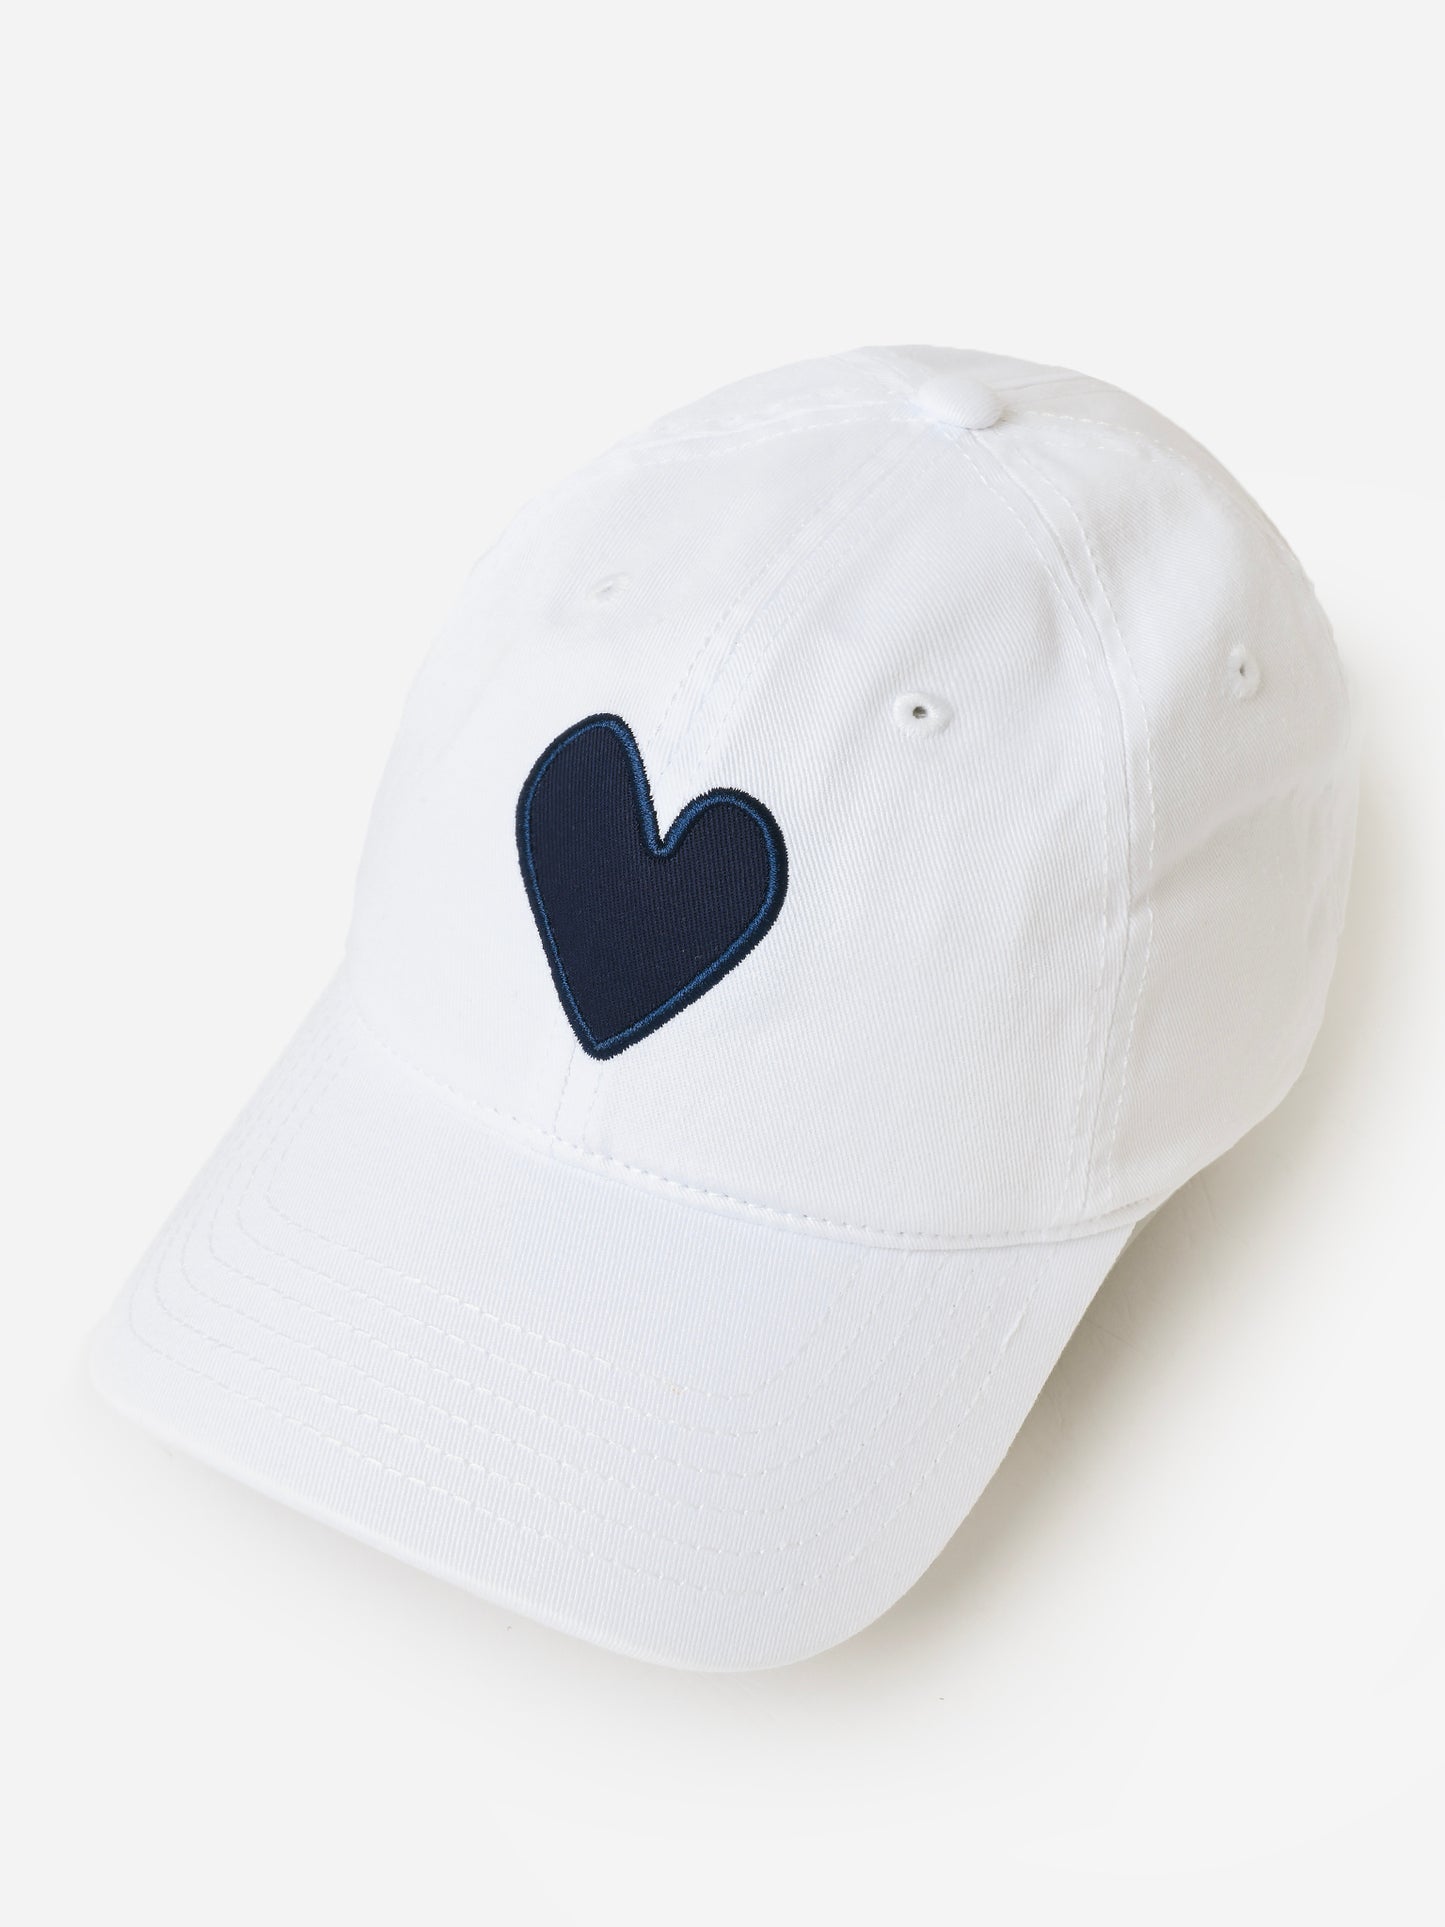 Kerri Rosenthal Women's Heart Patch Baseball Hat